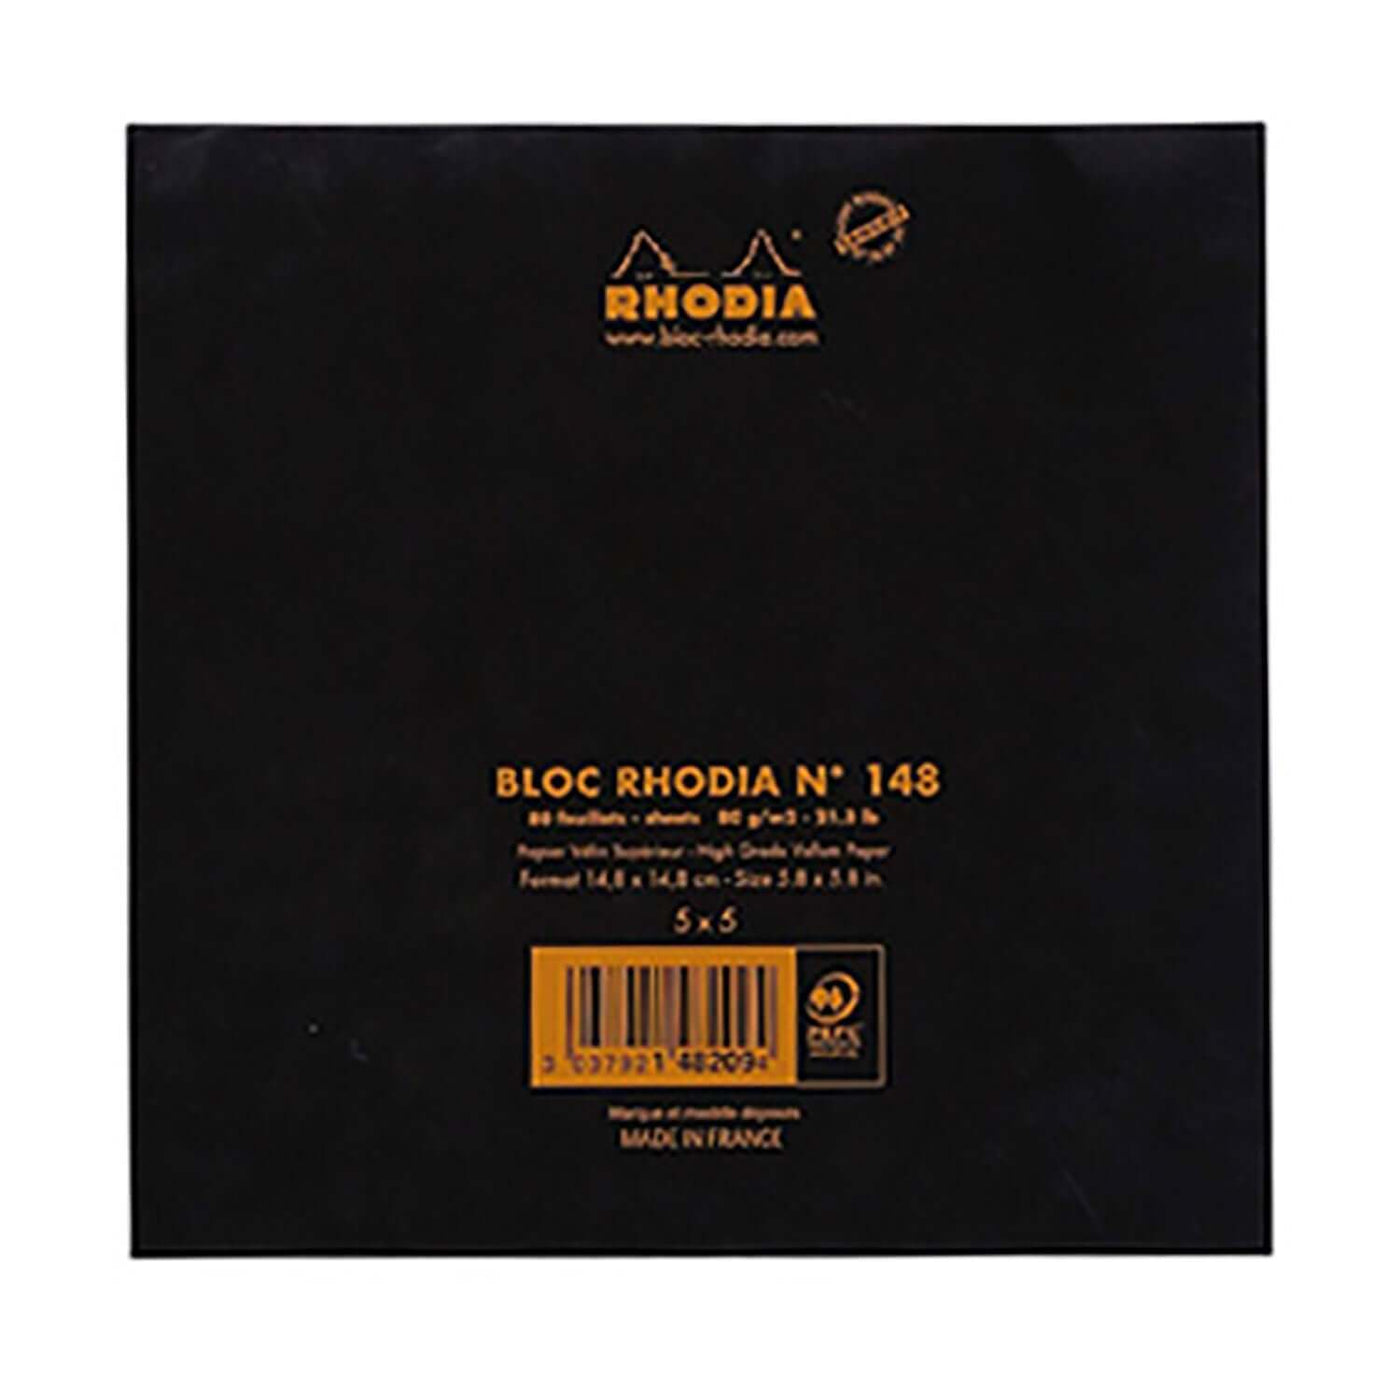 Rhodia Le Carre Notepad, Black - Ruled 6